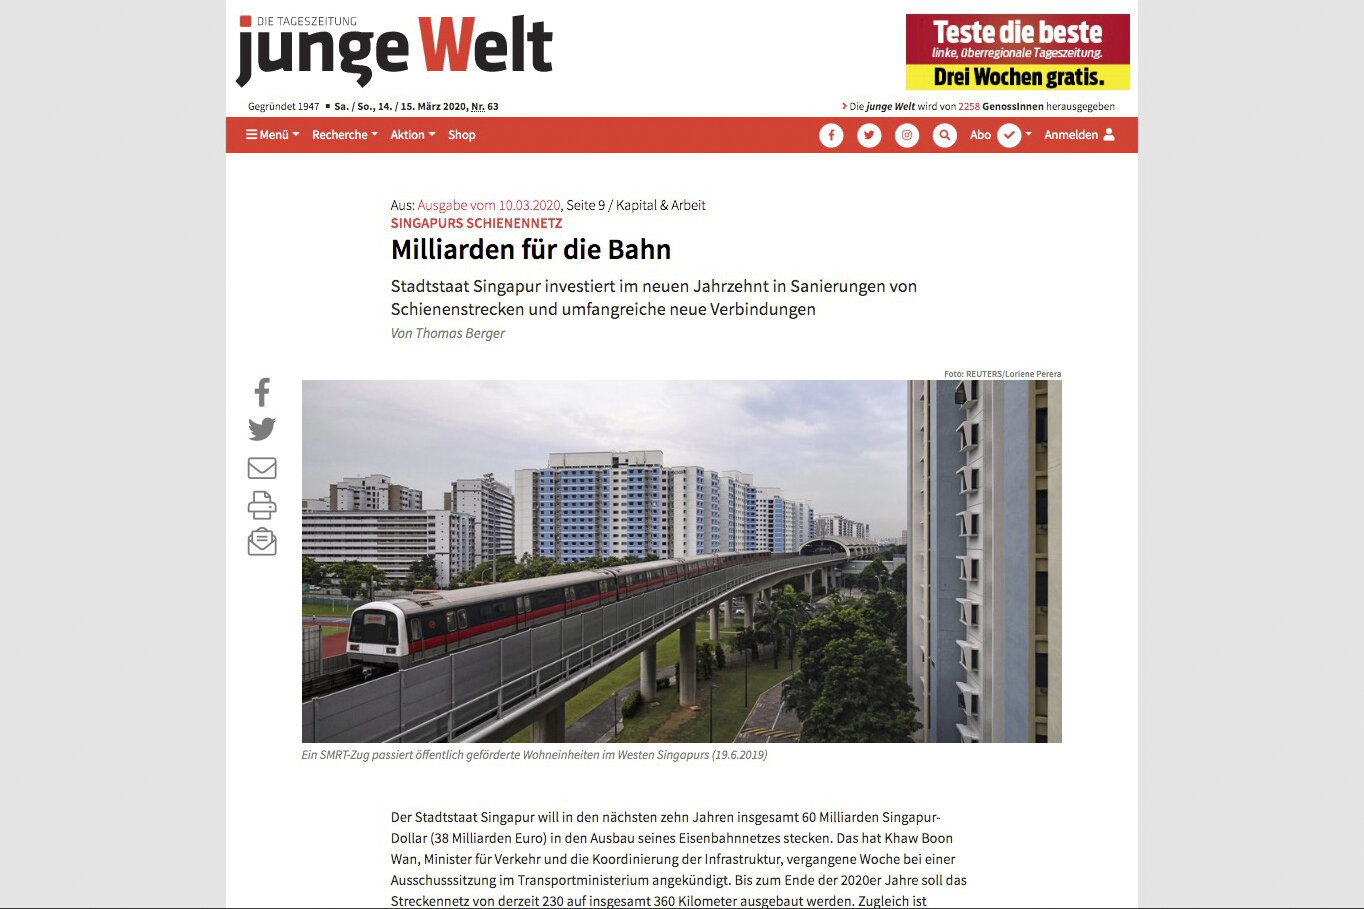  Junge Welt (German daily newspaper) 